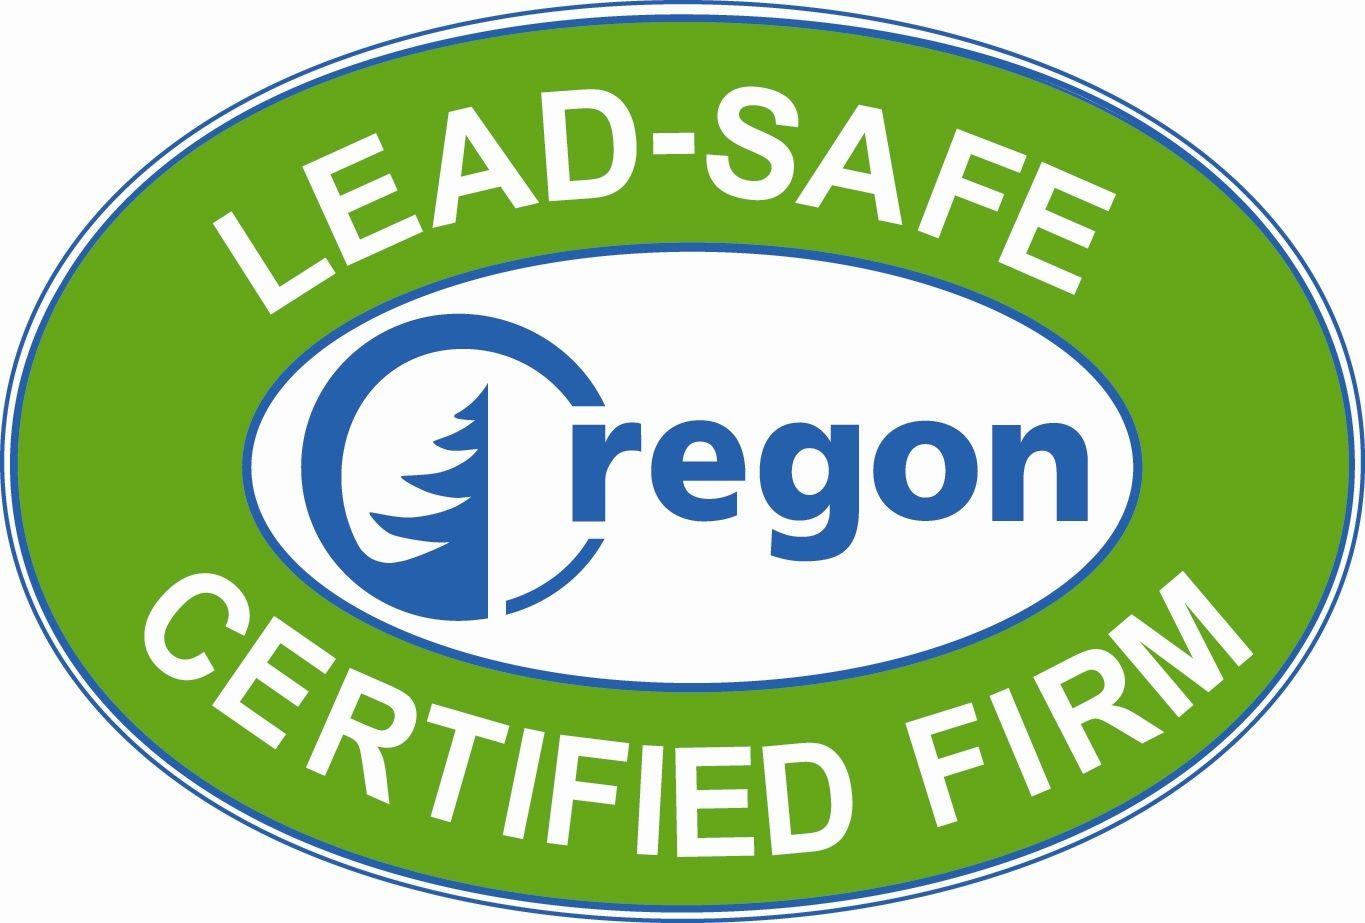 EPA Lead Safe Logo - Lead Safe Certified Logo Home Builders Association